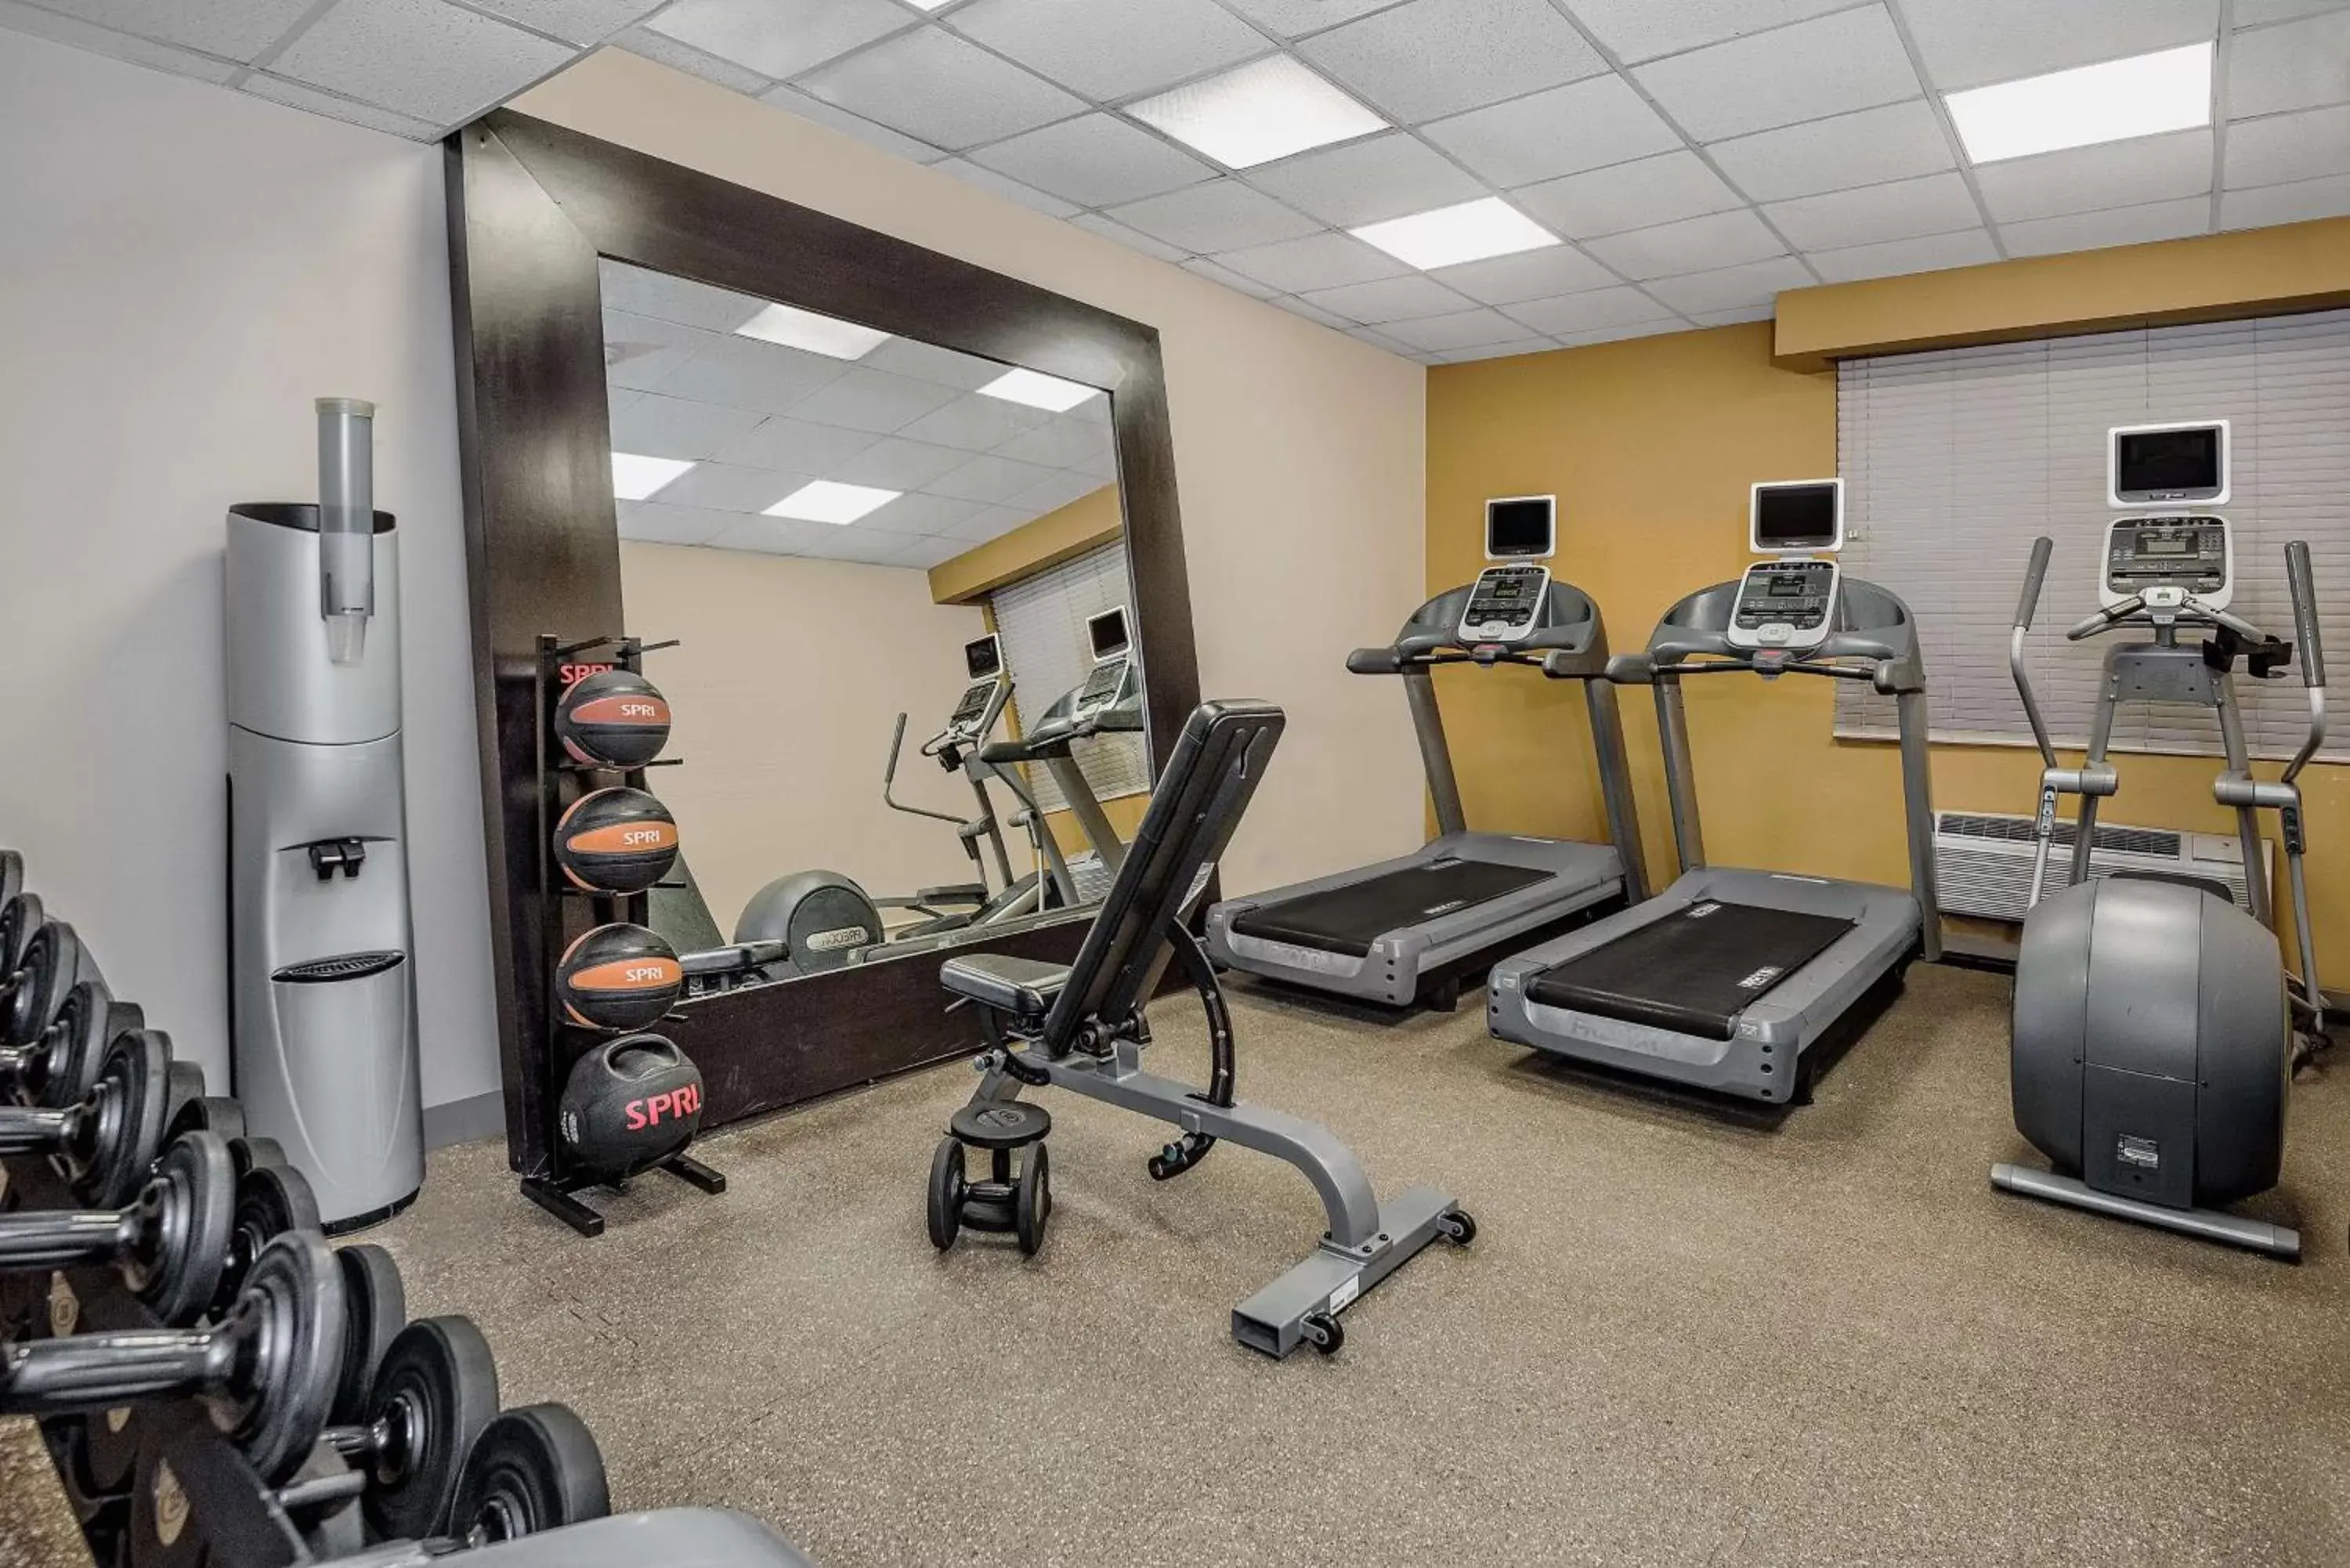 Fitness centre/facilities, Fitness Center/Facilities in Hilton Garden Inn San Antonio Airport